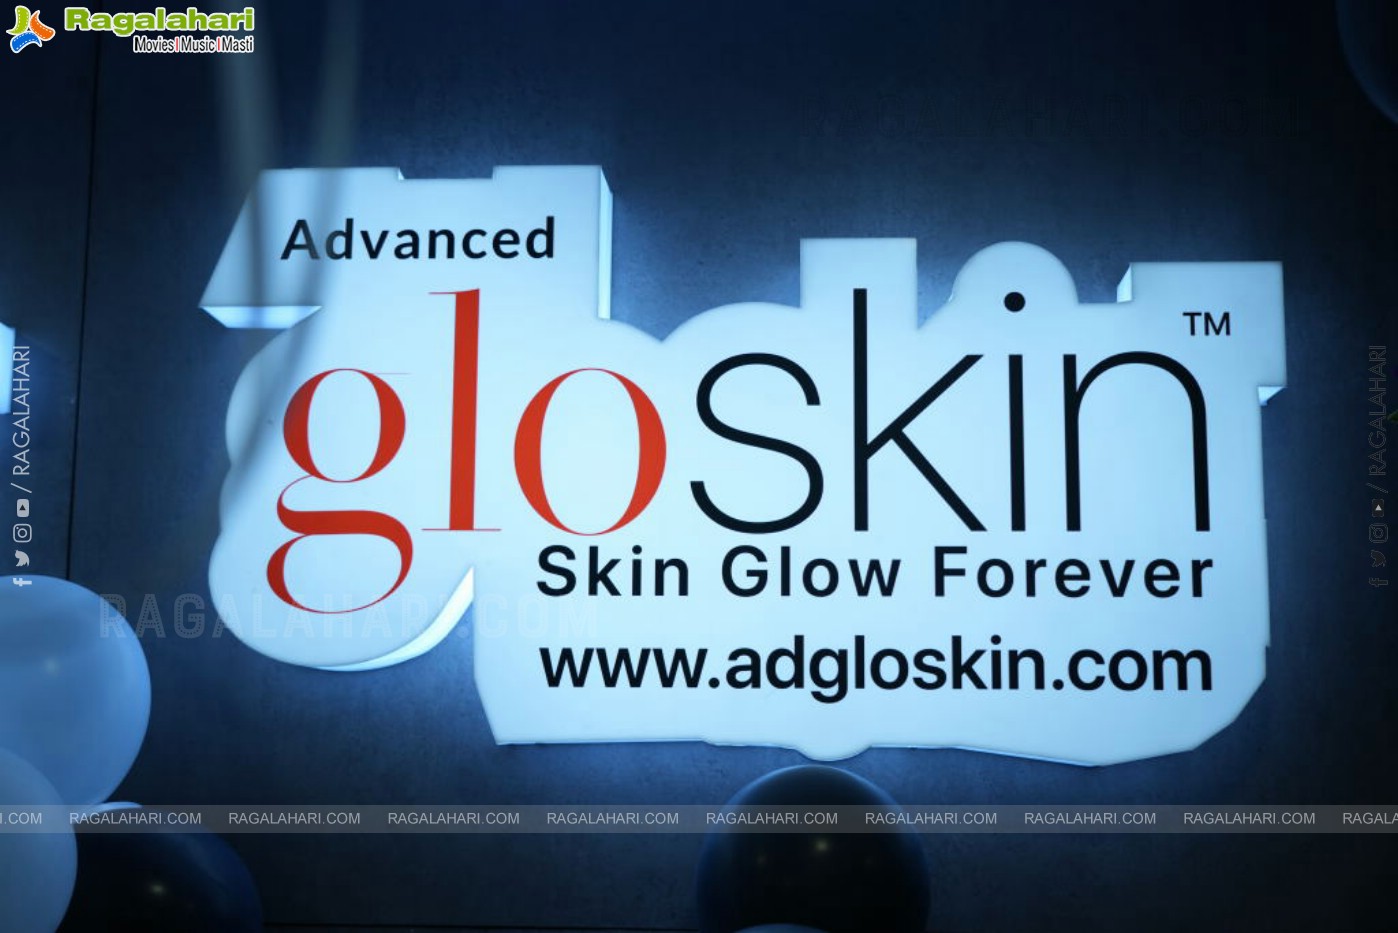 Actress Himaja Launches Advanced grohair and glo skin Clinic at Kokapet